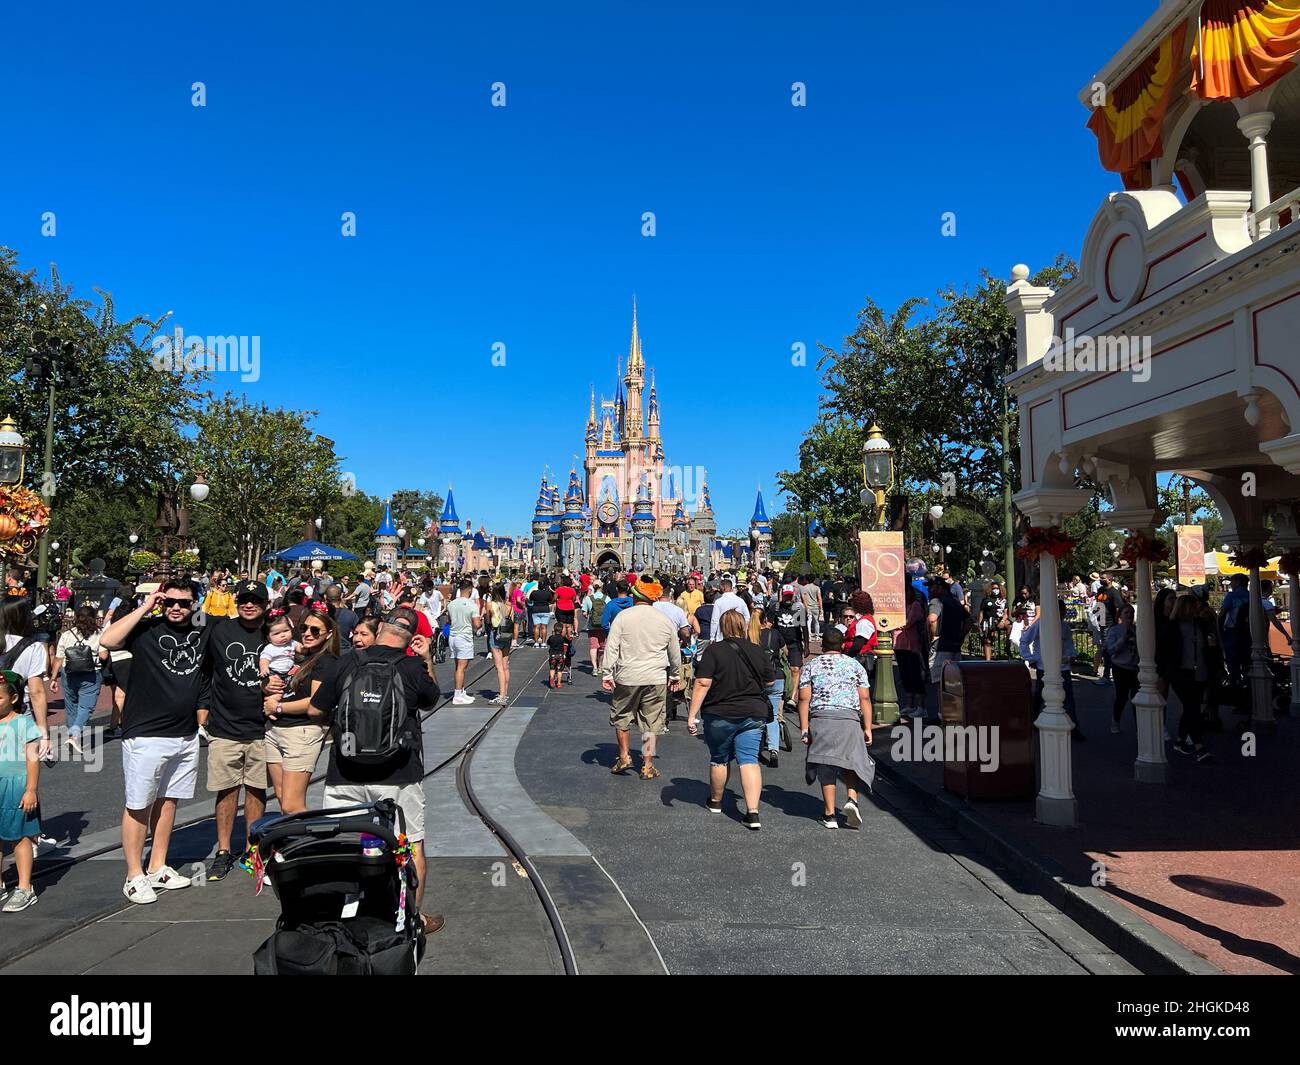 Orlando, FL USA - October 30, 2021: People walking toward Cinderella Castle in Walt Disney World Magic Kingdom in Orlando, Florida. Stock Photo